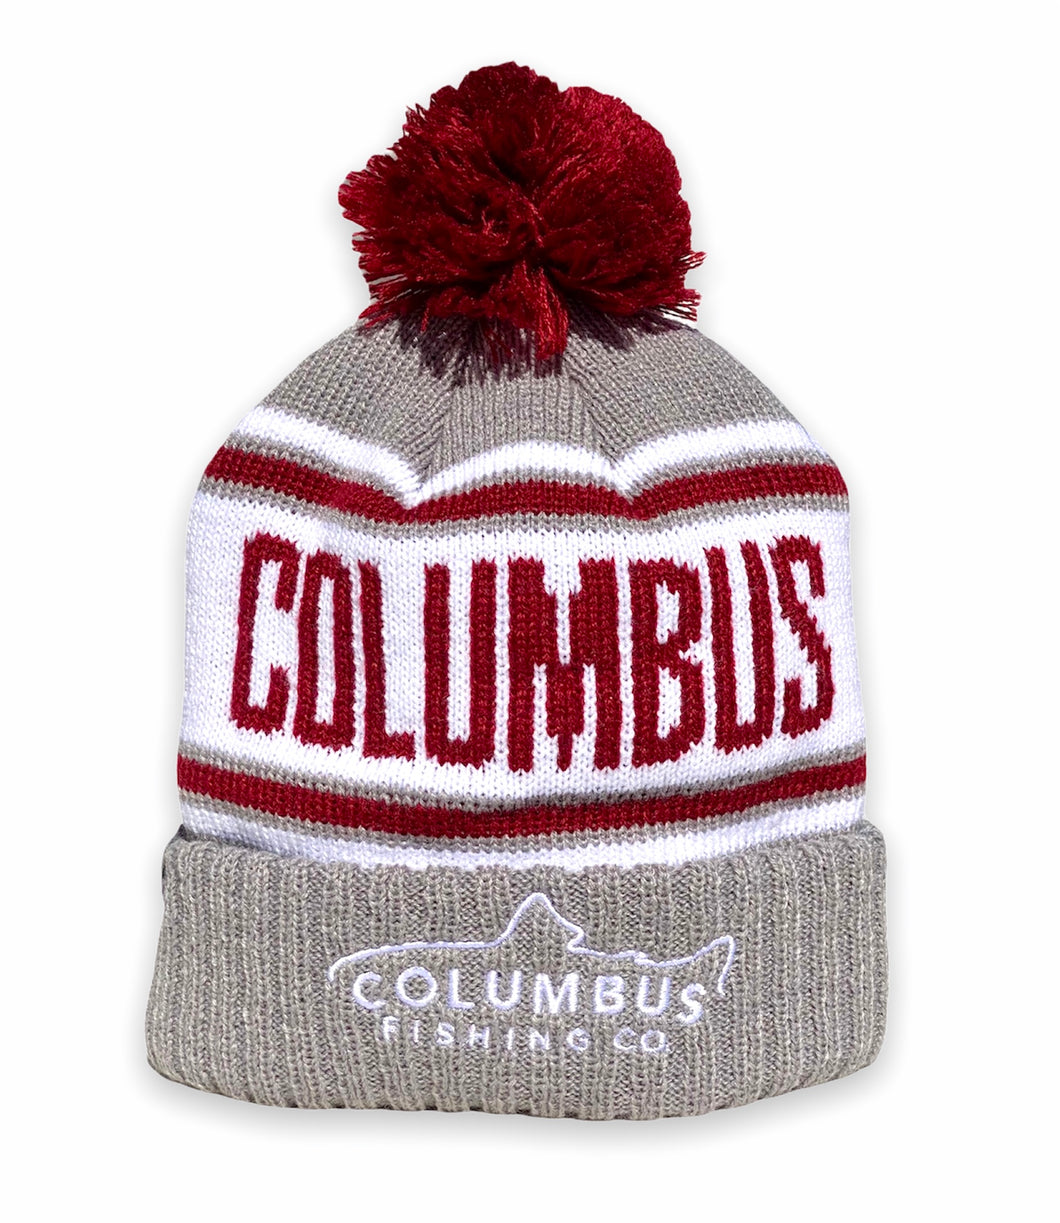 Columbus - Knit Hat